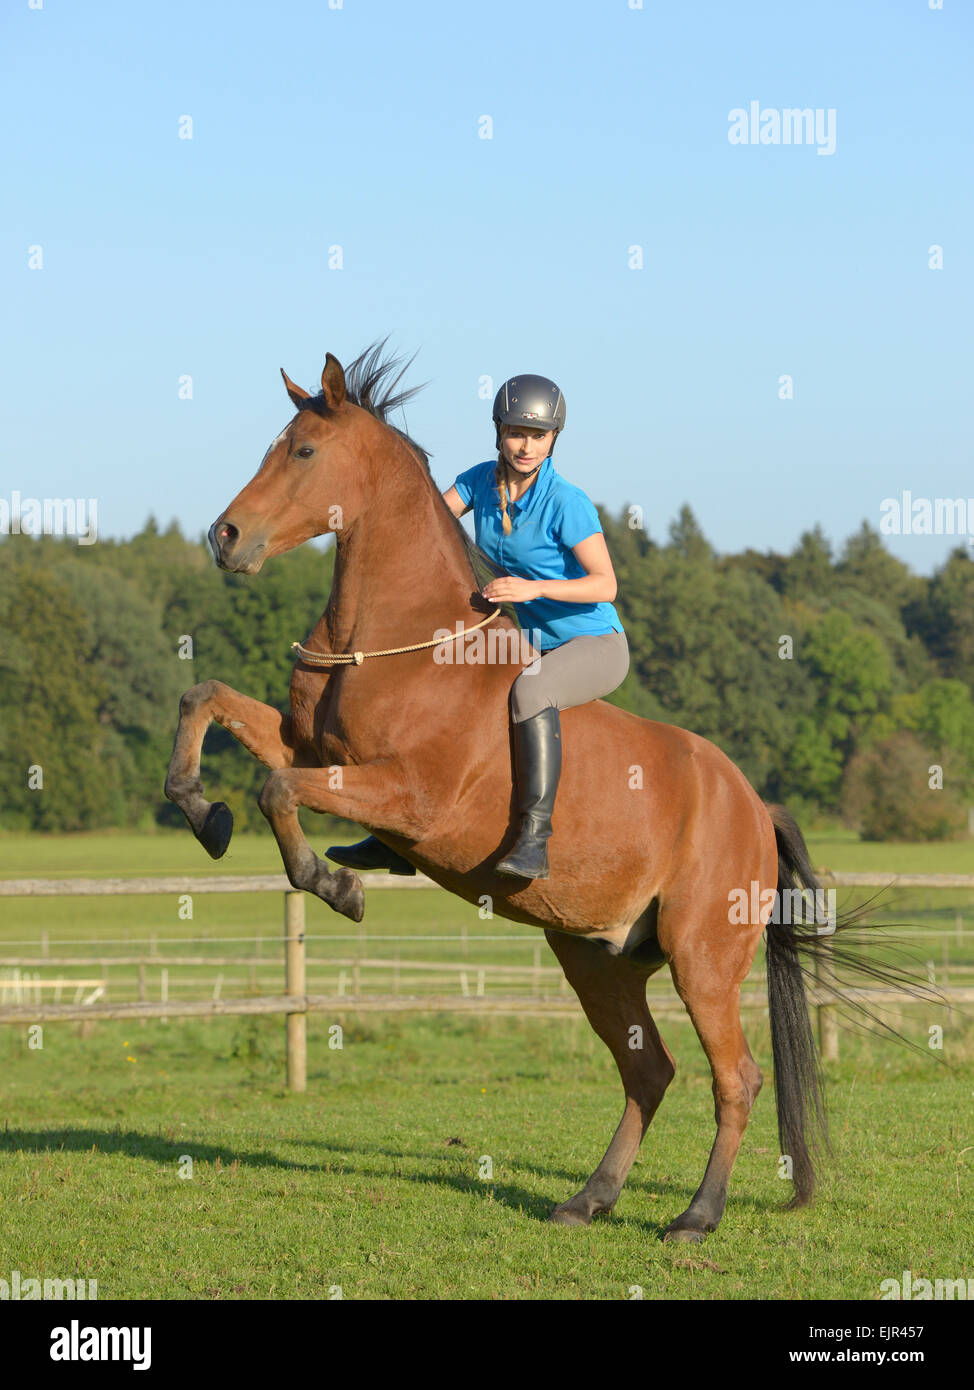 Rider bareback on a rearing Arab horse Stock Photo